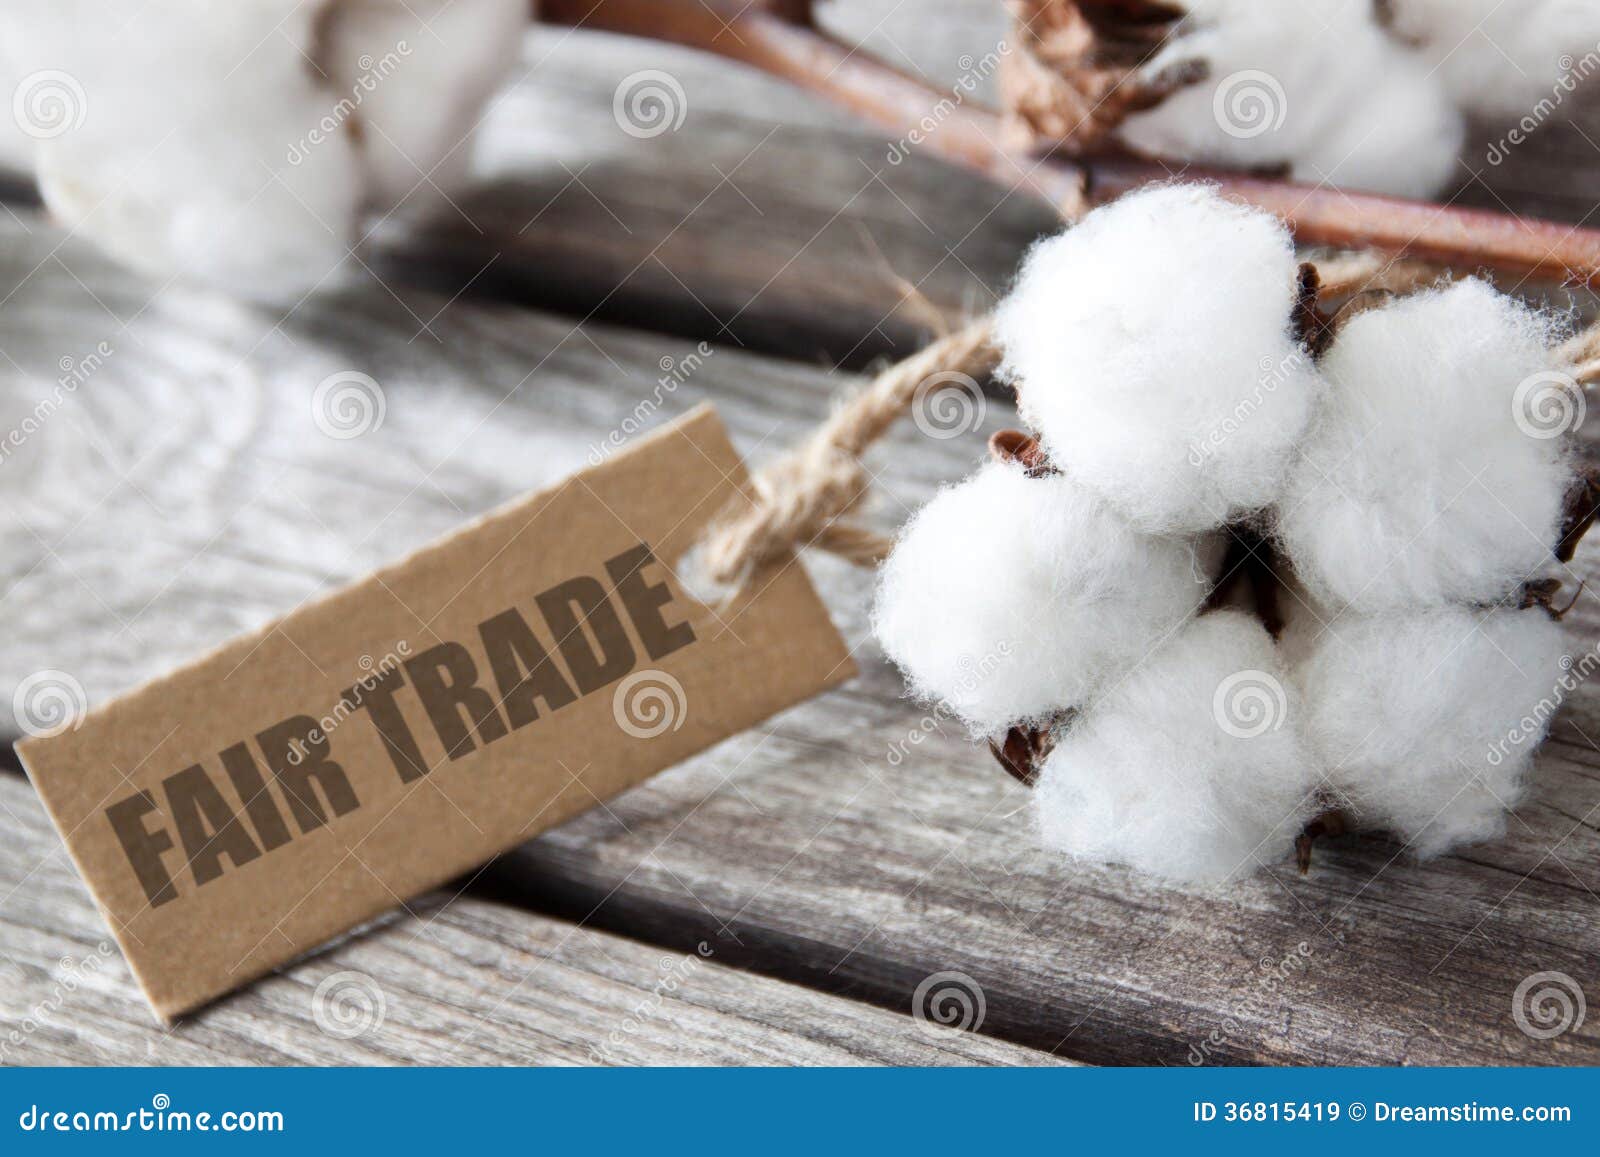 Cotton Fair trade stock image. Image of environment 36815419